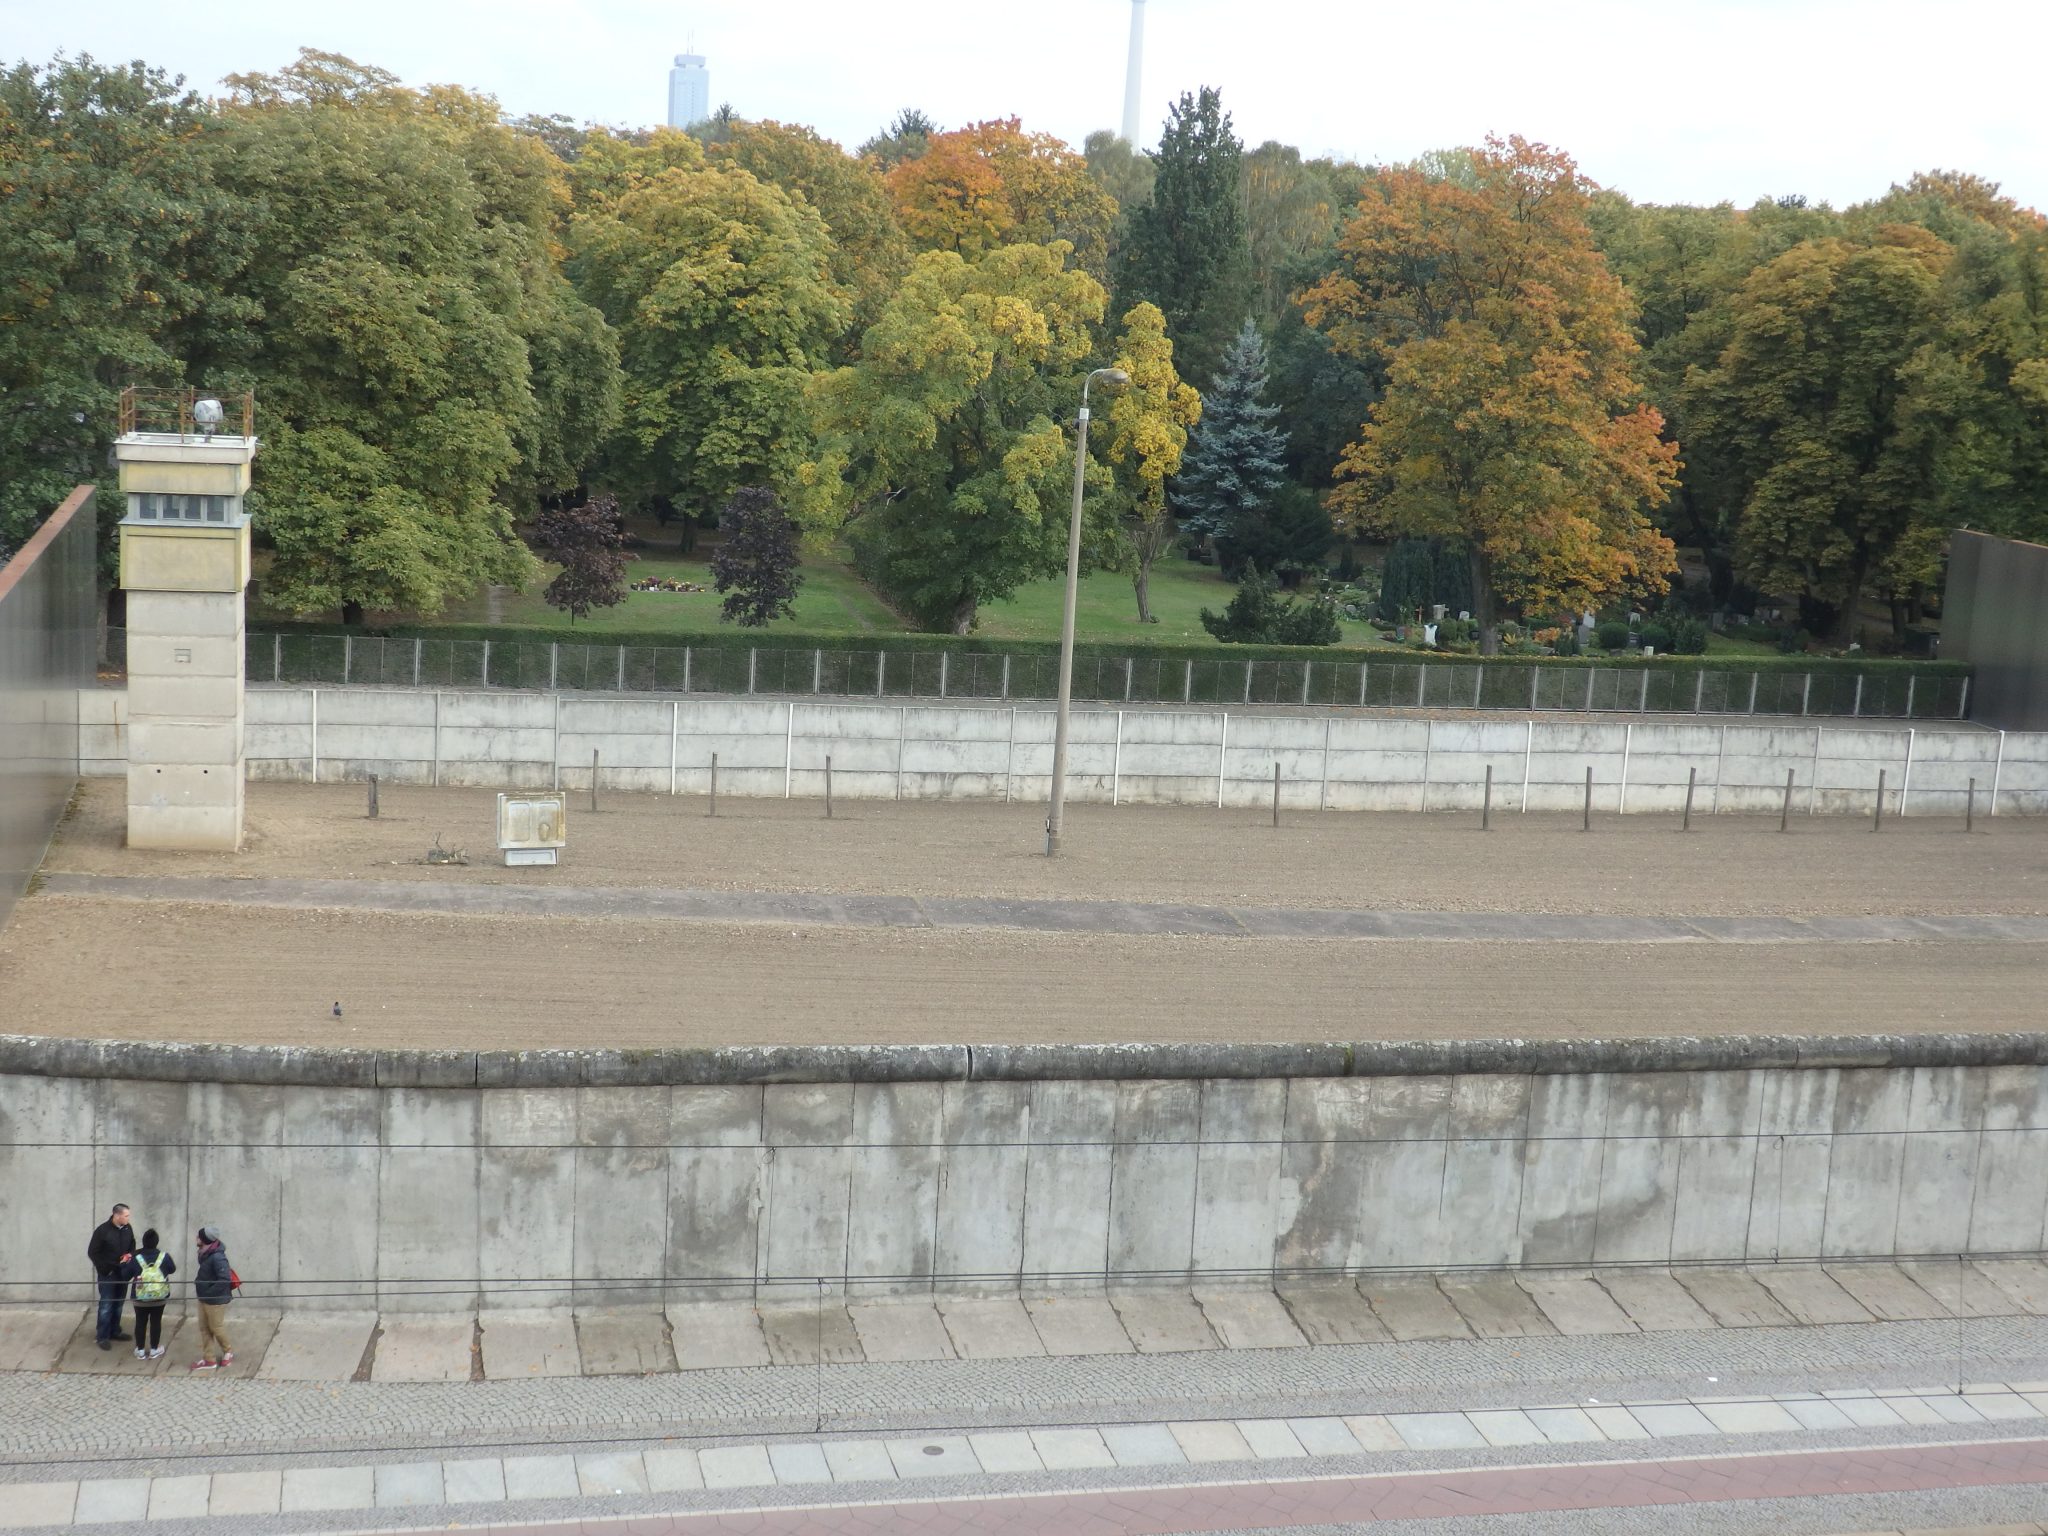 The Berlin Wall Memorial Illuminates Berlin’s Divided Past